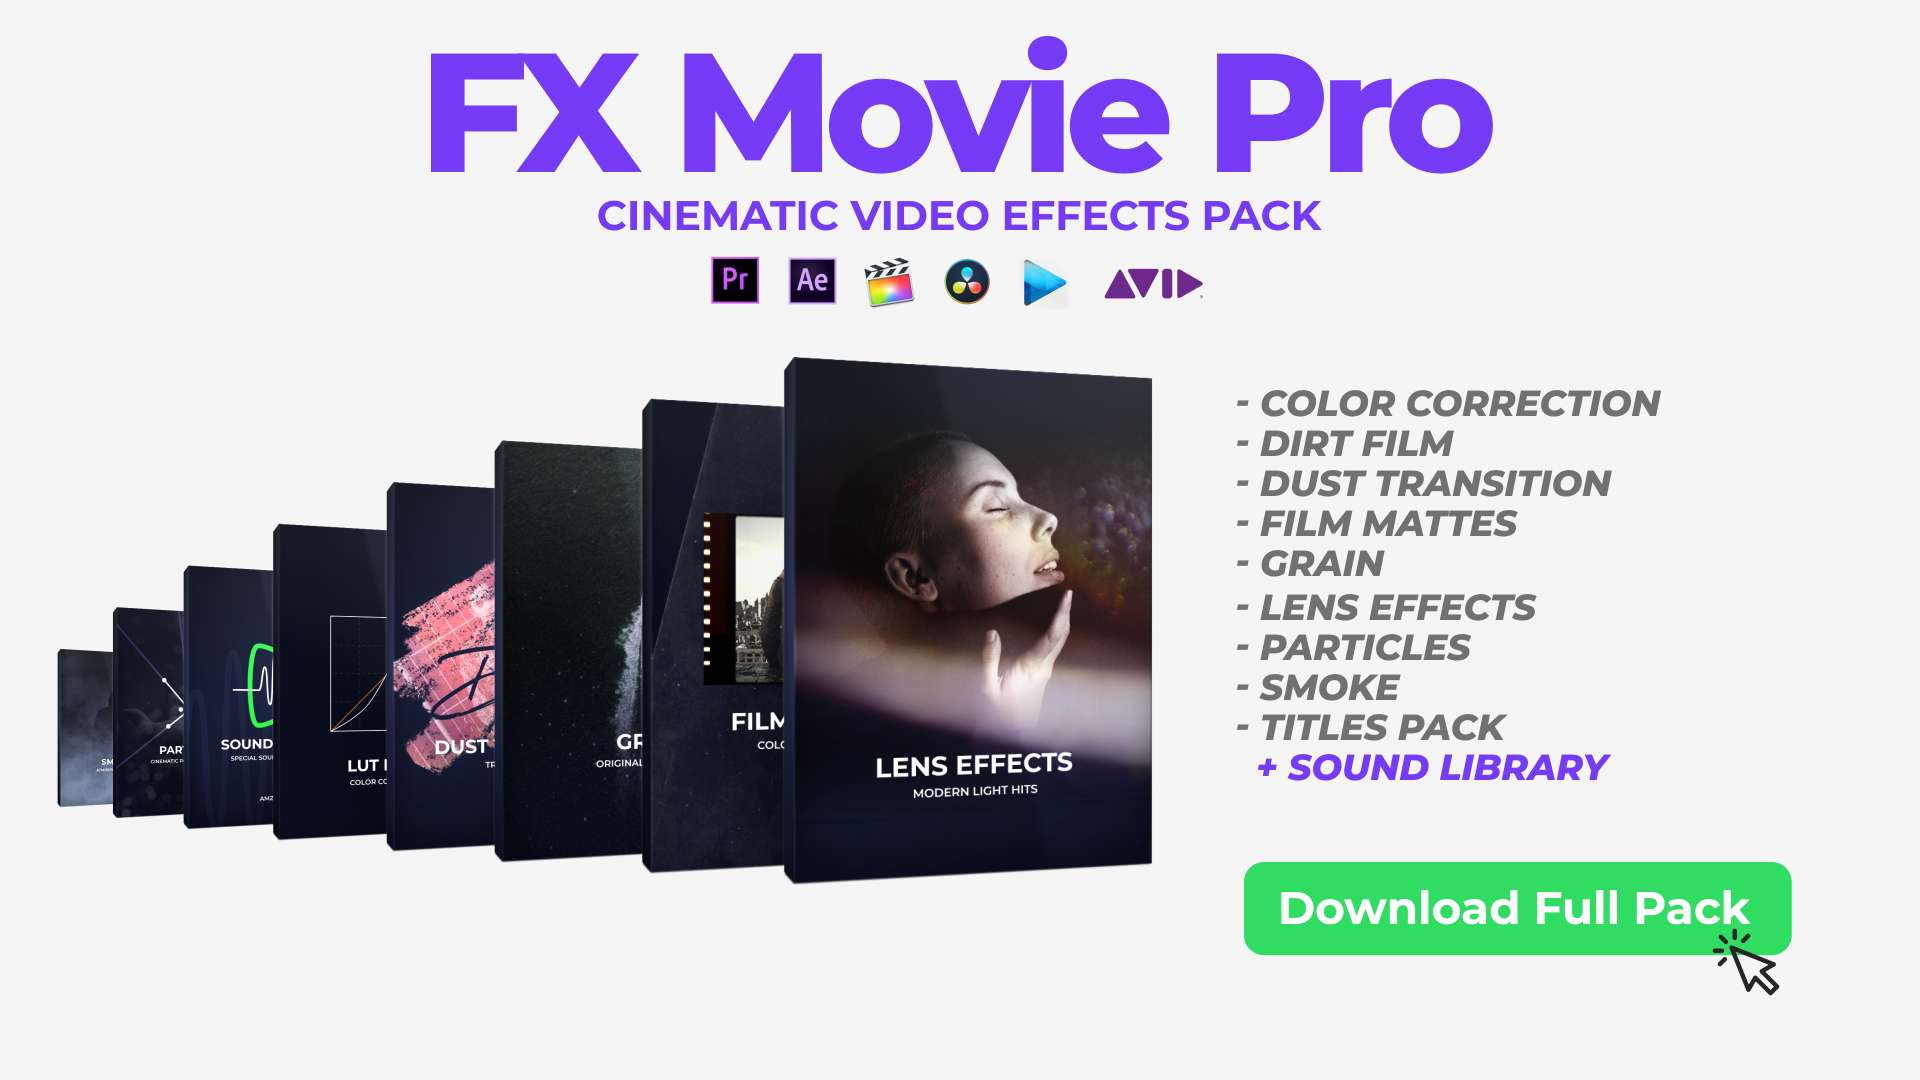  Demo FX Movie Pro cinematic effects 